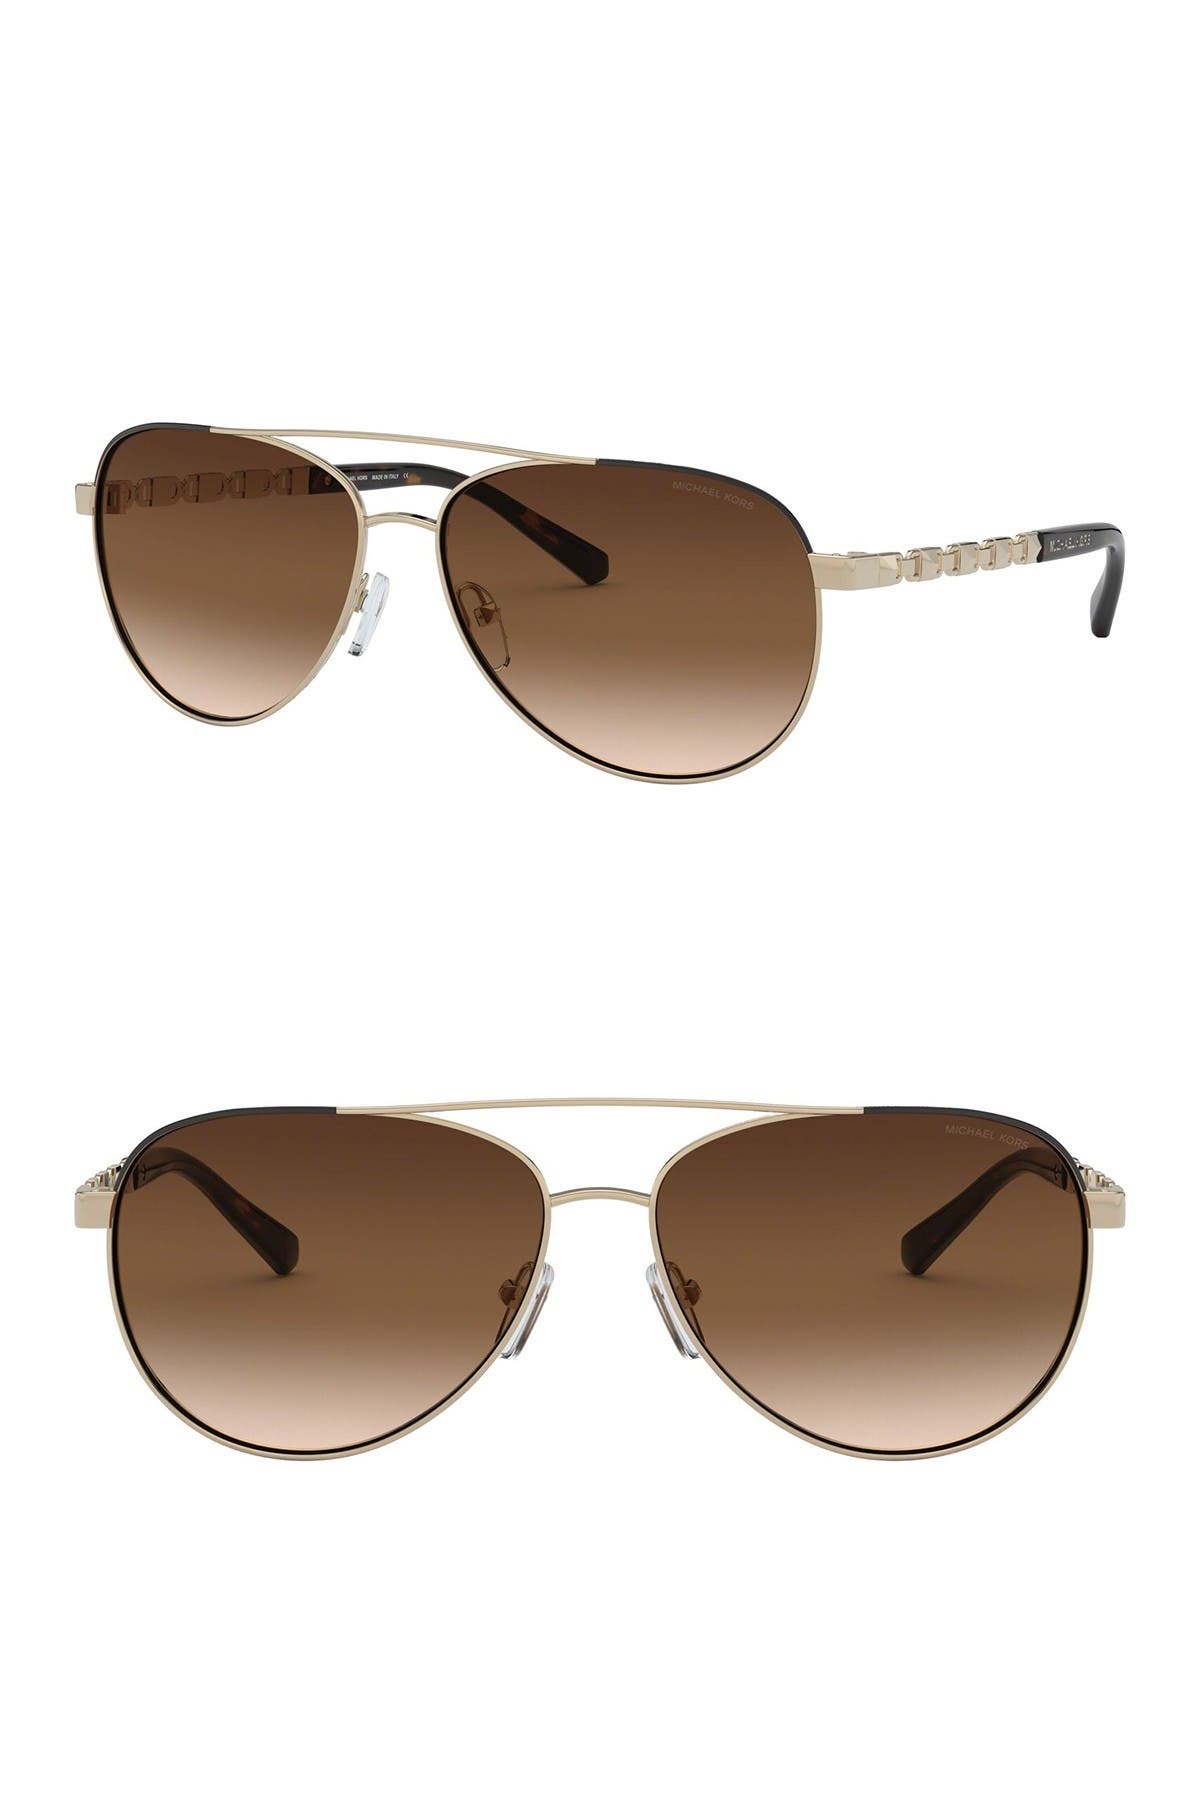 Michael Kors | 59mm Pilot Sunglasses 